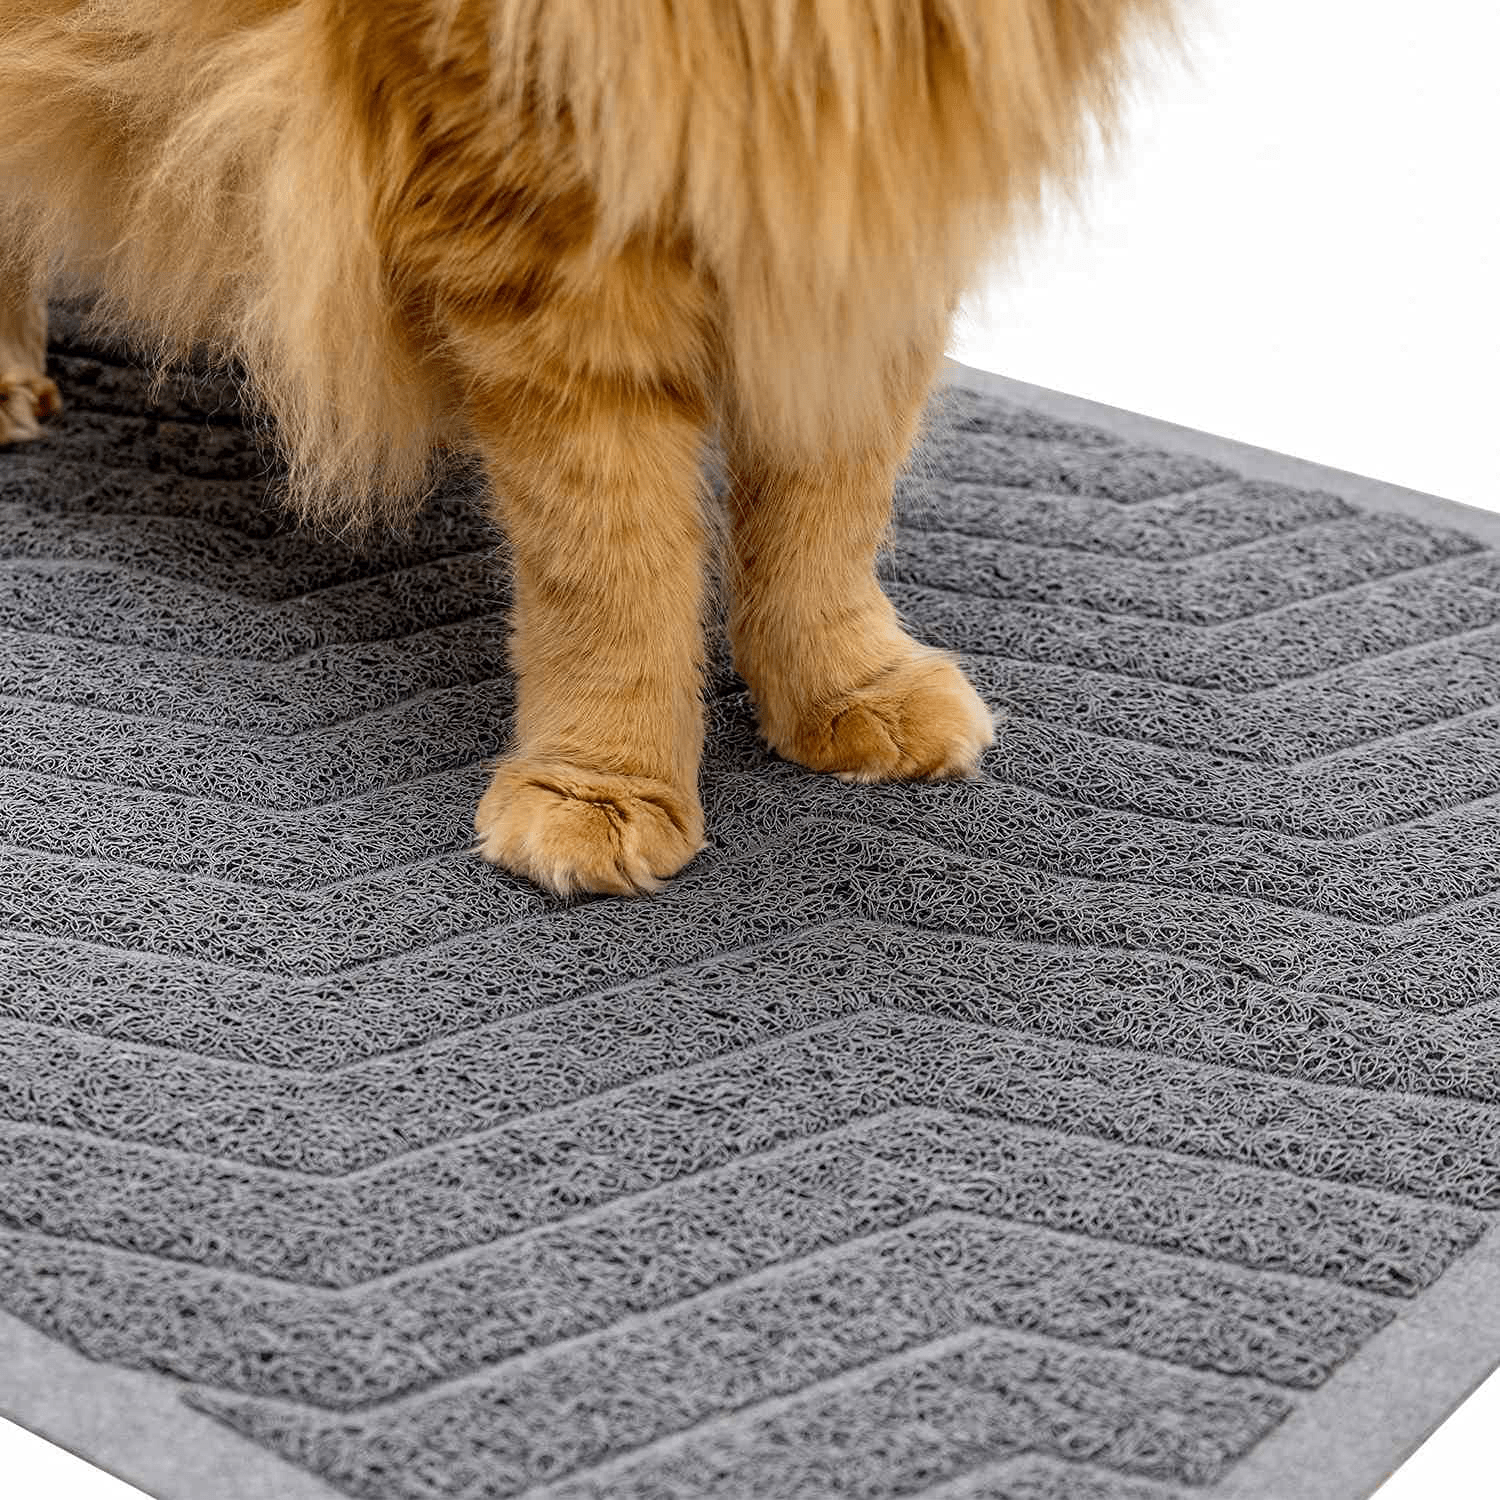 Wepet Katzenstreu-Matte, Netzmatte zum Auffangen von Katzenstreu